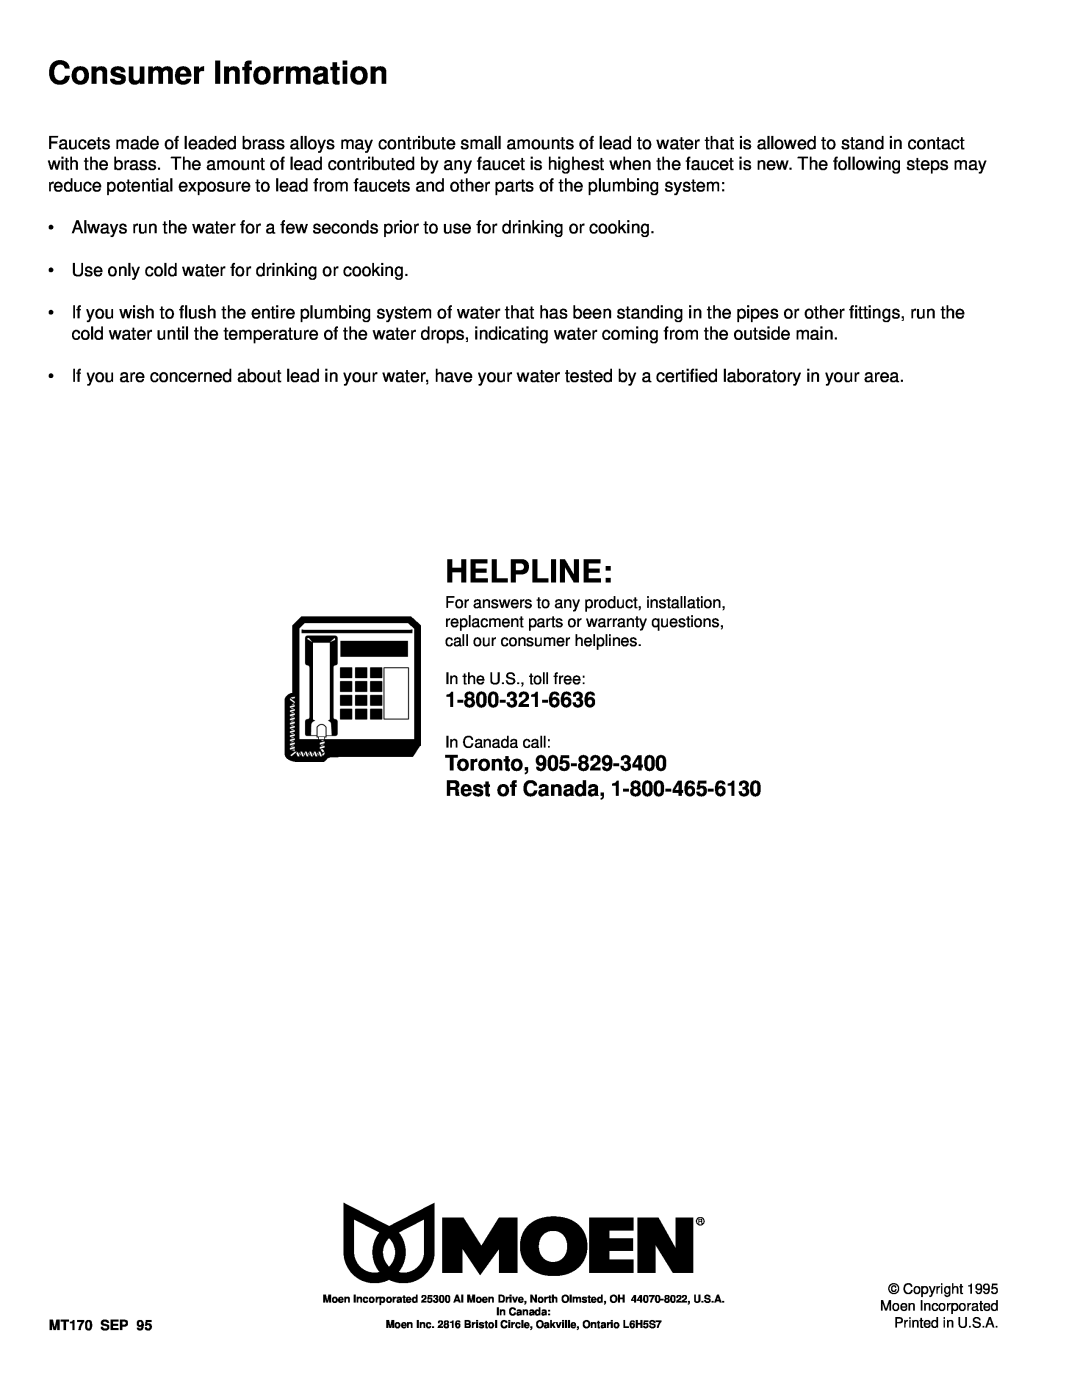 Moen 8700, 7300 installation instructions Consumer Information, Helpline, Toronto, Rest of Canada 